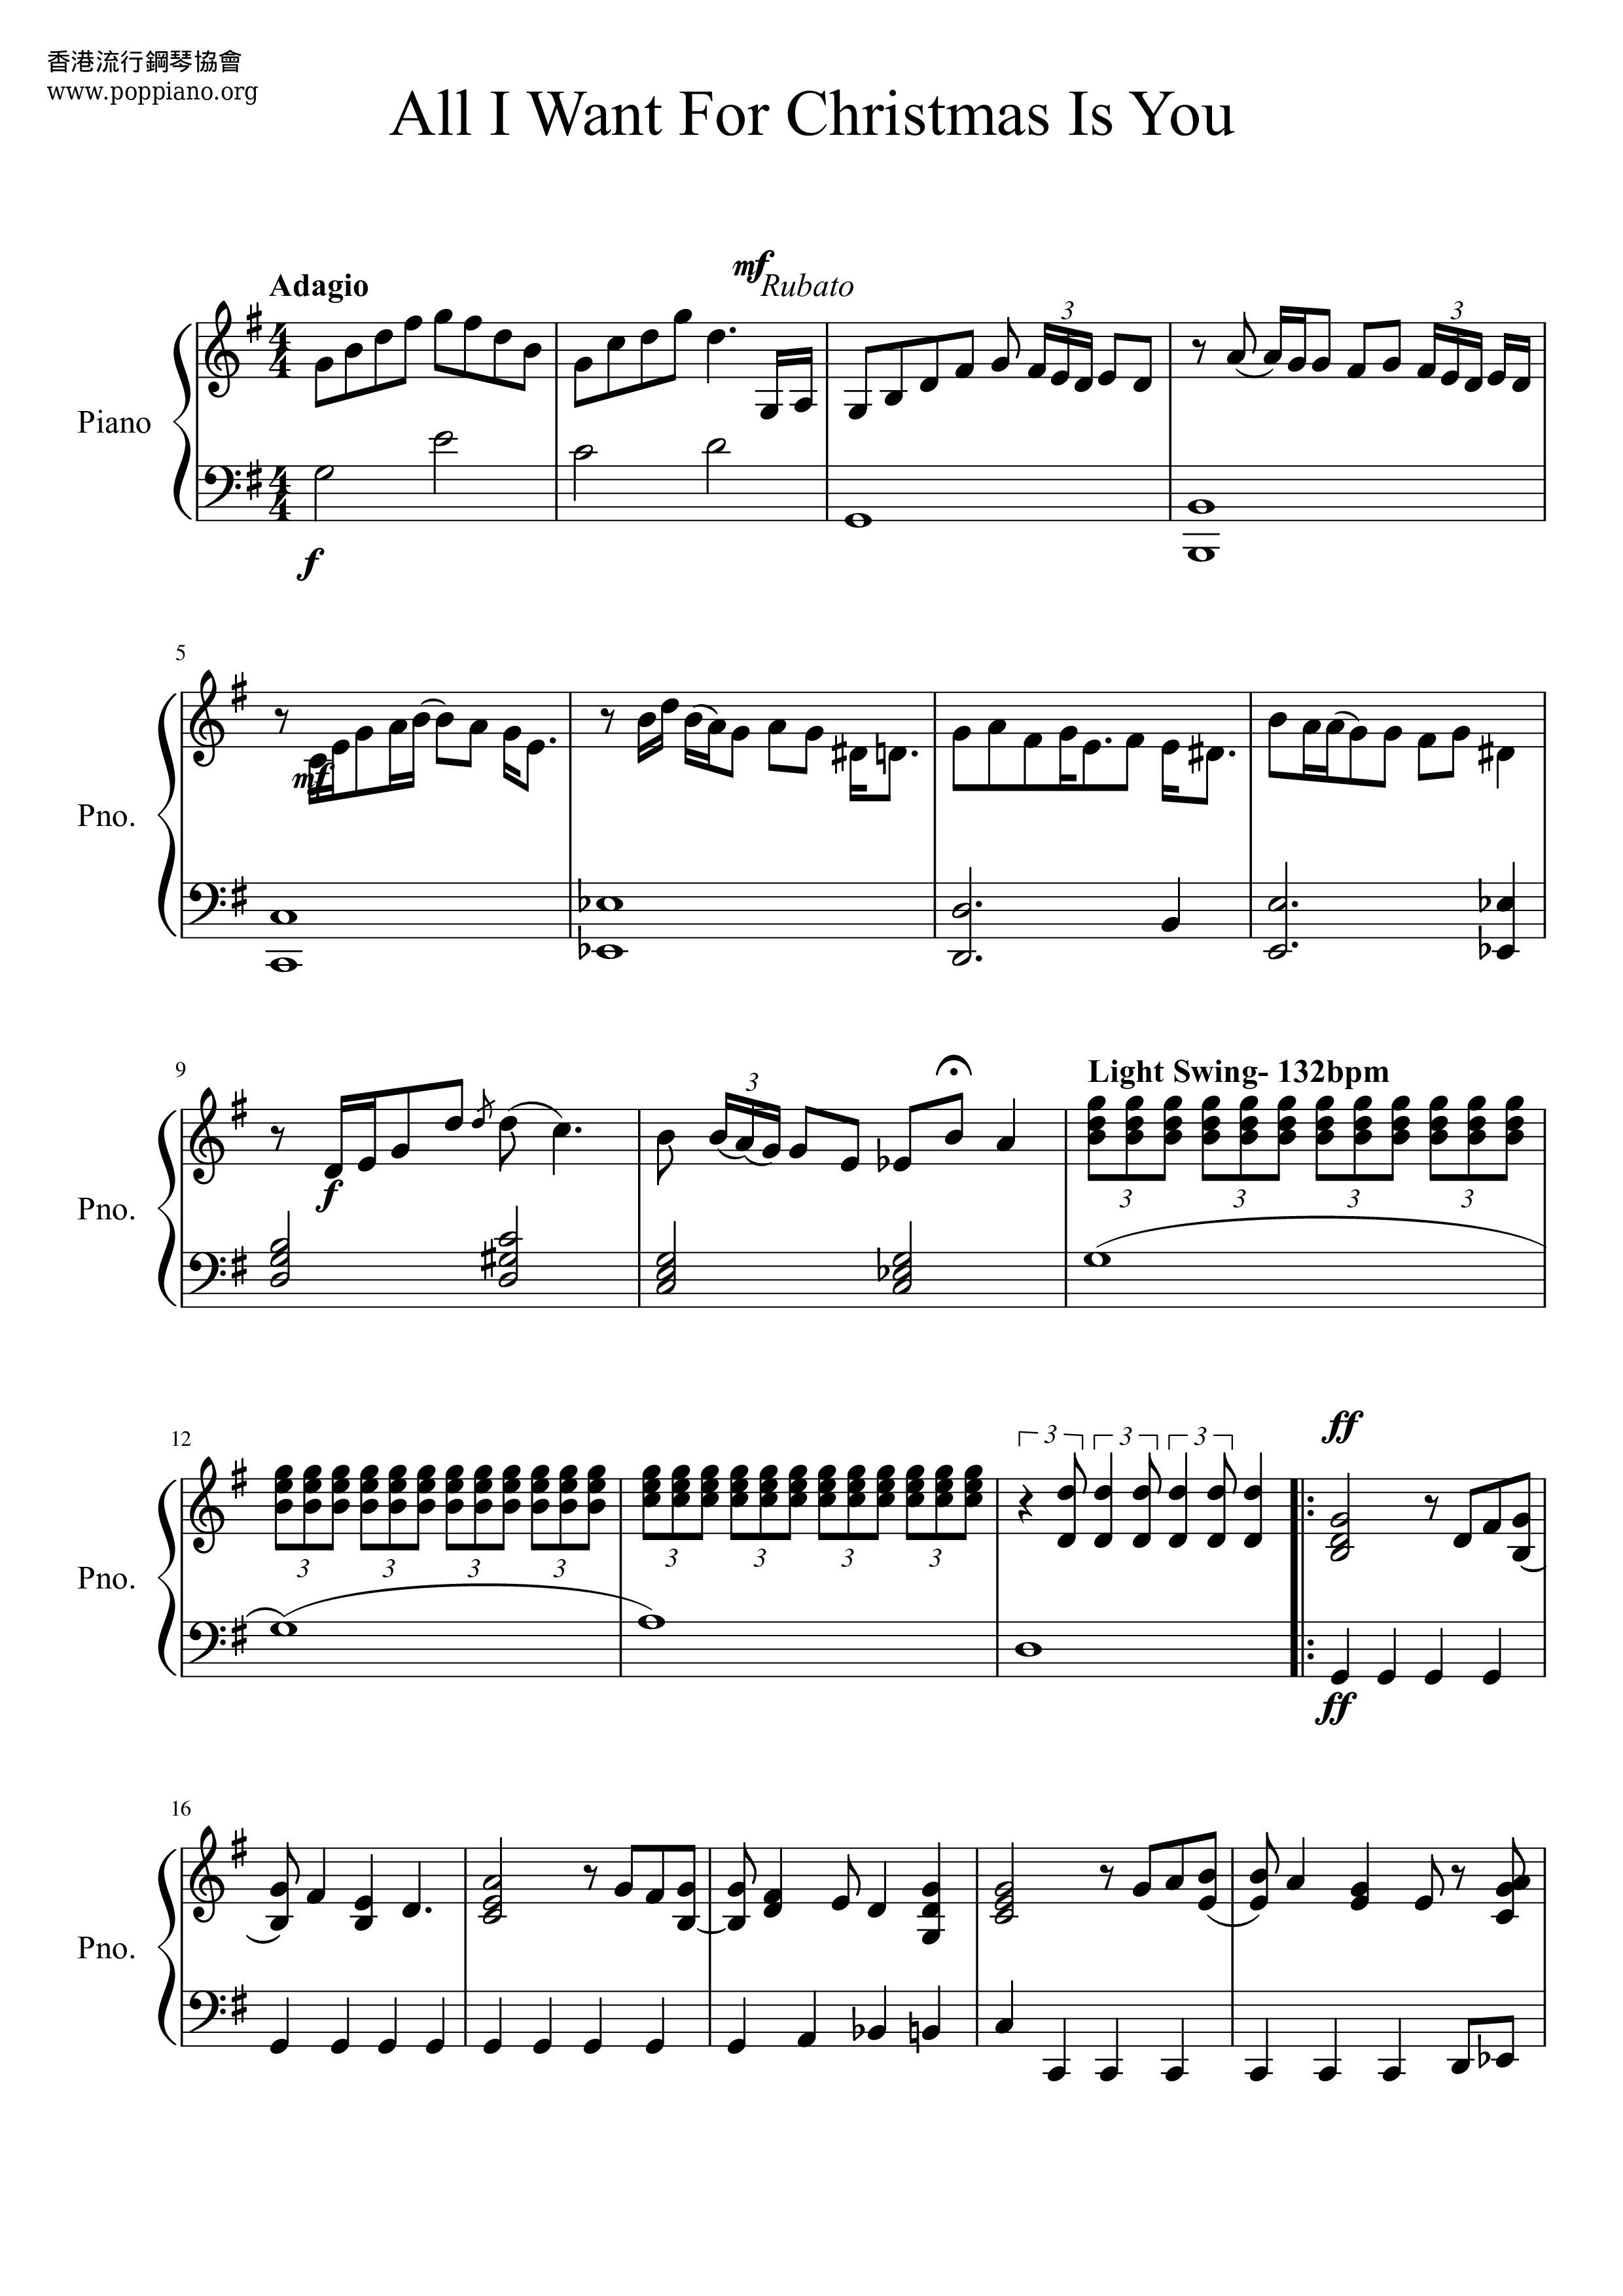 balsa Punto Masaje ☆ All I Want For Christmas Is You - Sheet Music / Piano Score Free PDF  Download - HK Pop Piano Academy ☆